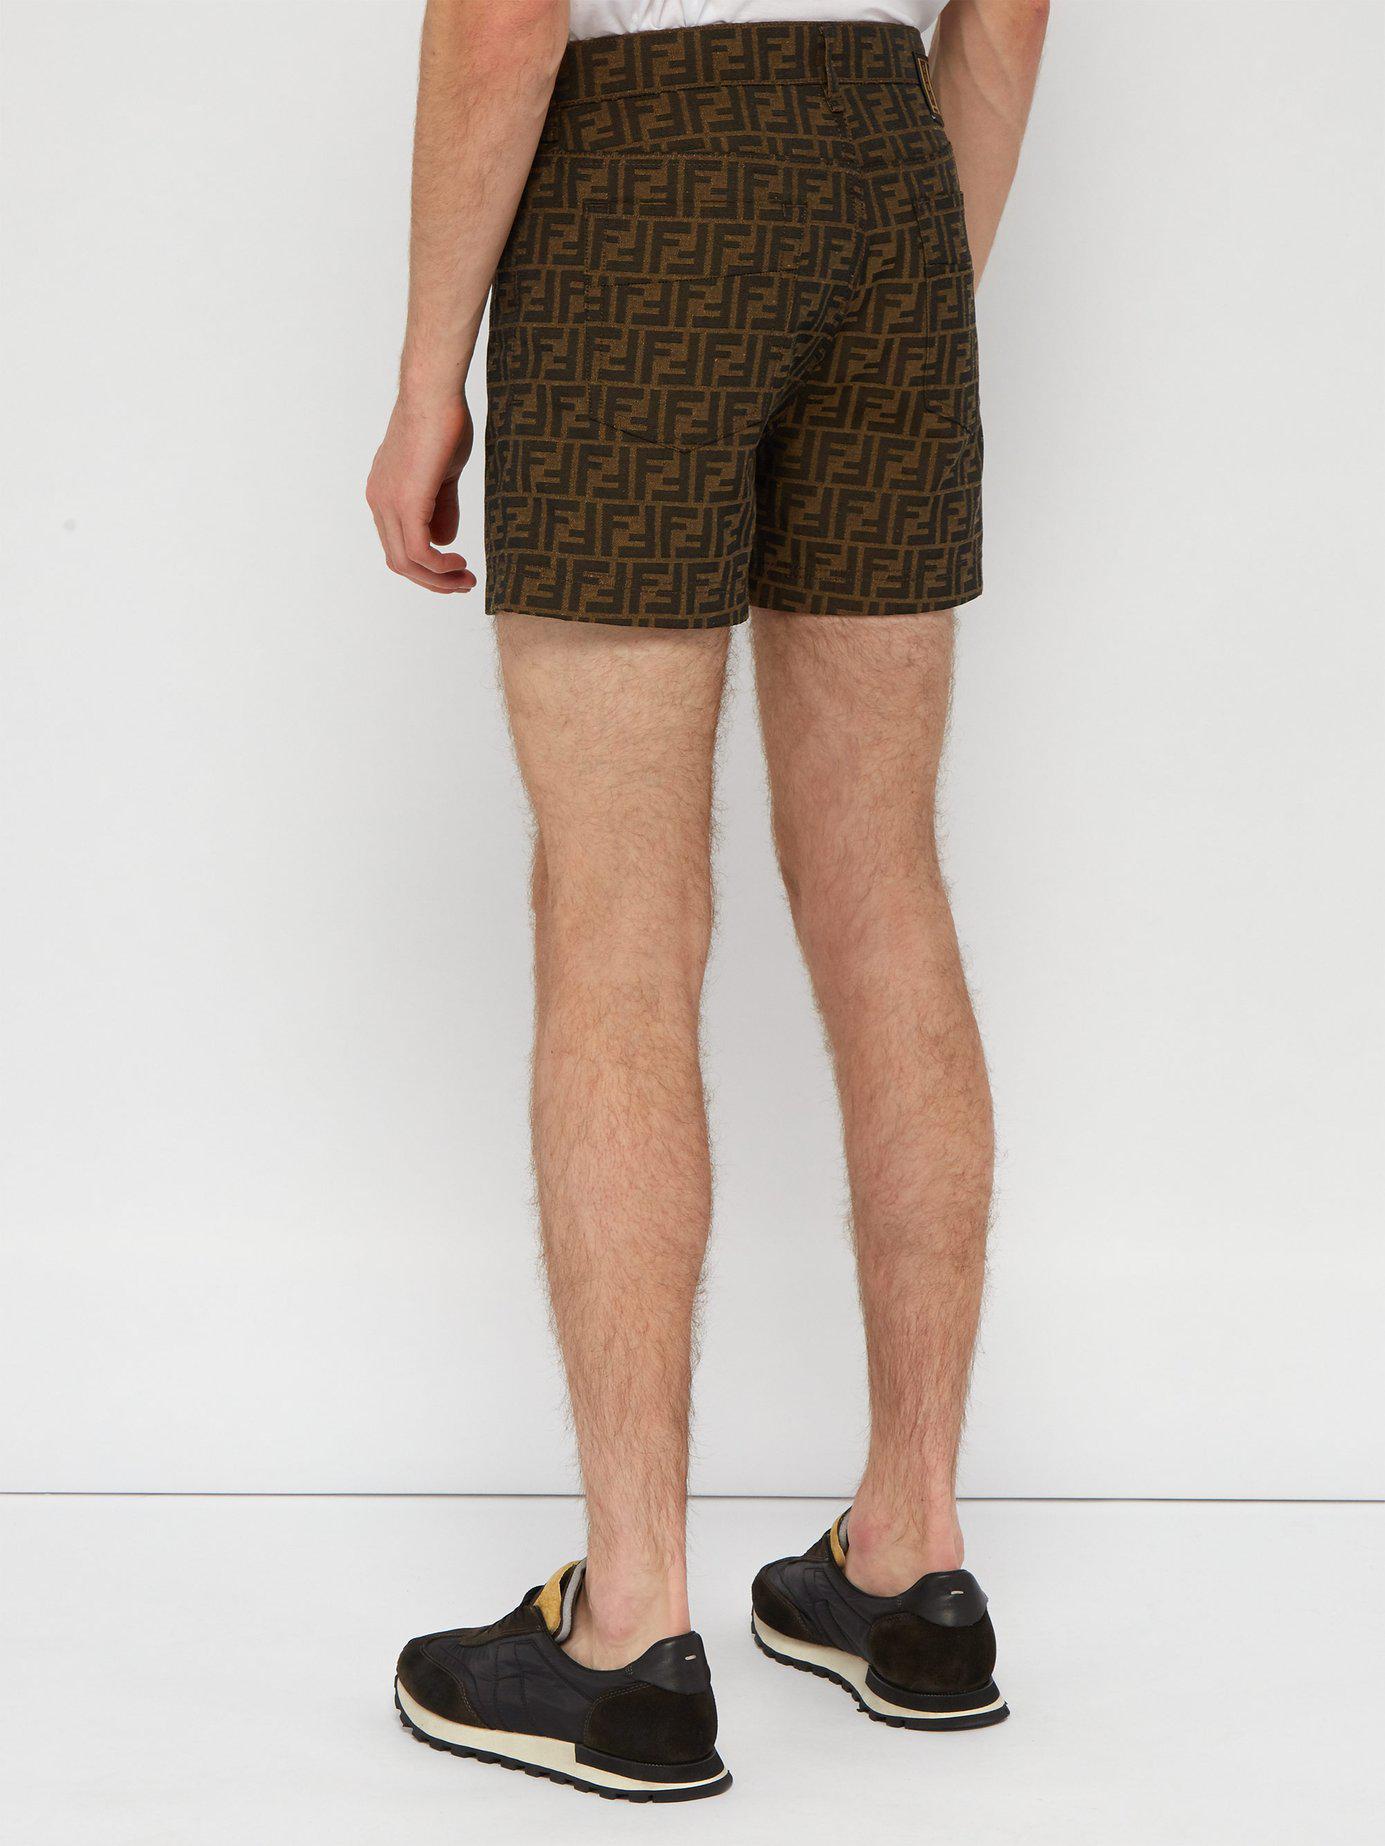 Fendi Rubber Ff Jacquard Shorts for Men - Lyst